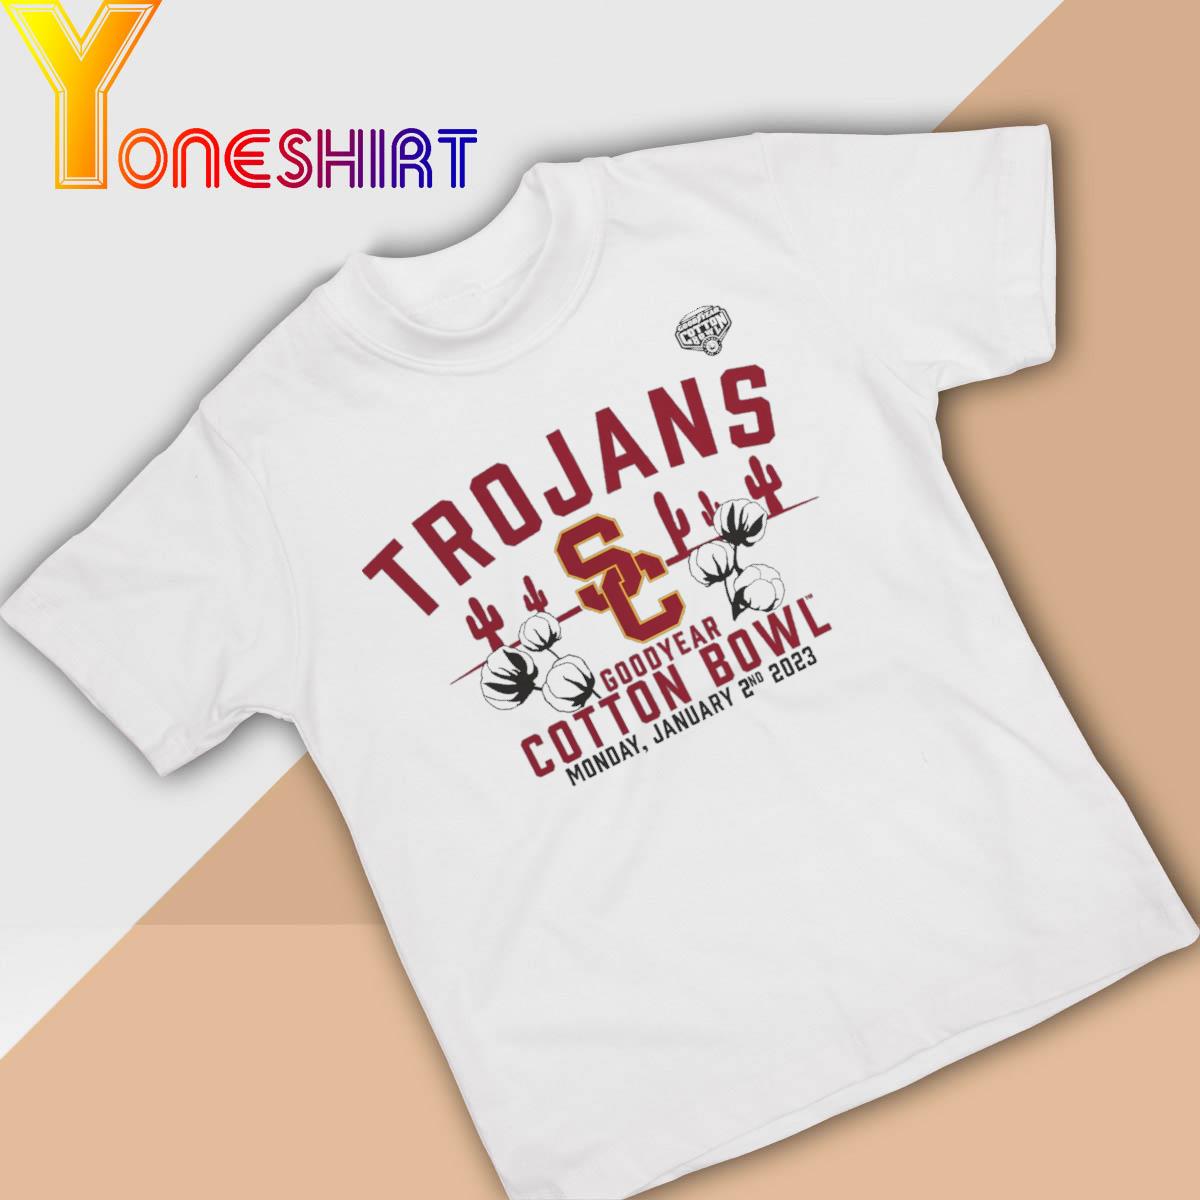 USC Trojans Goodyear Cotton Bowl 2023 shirt